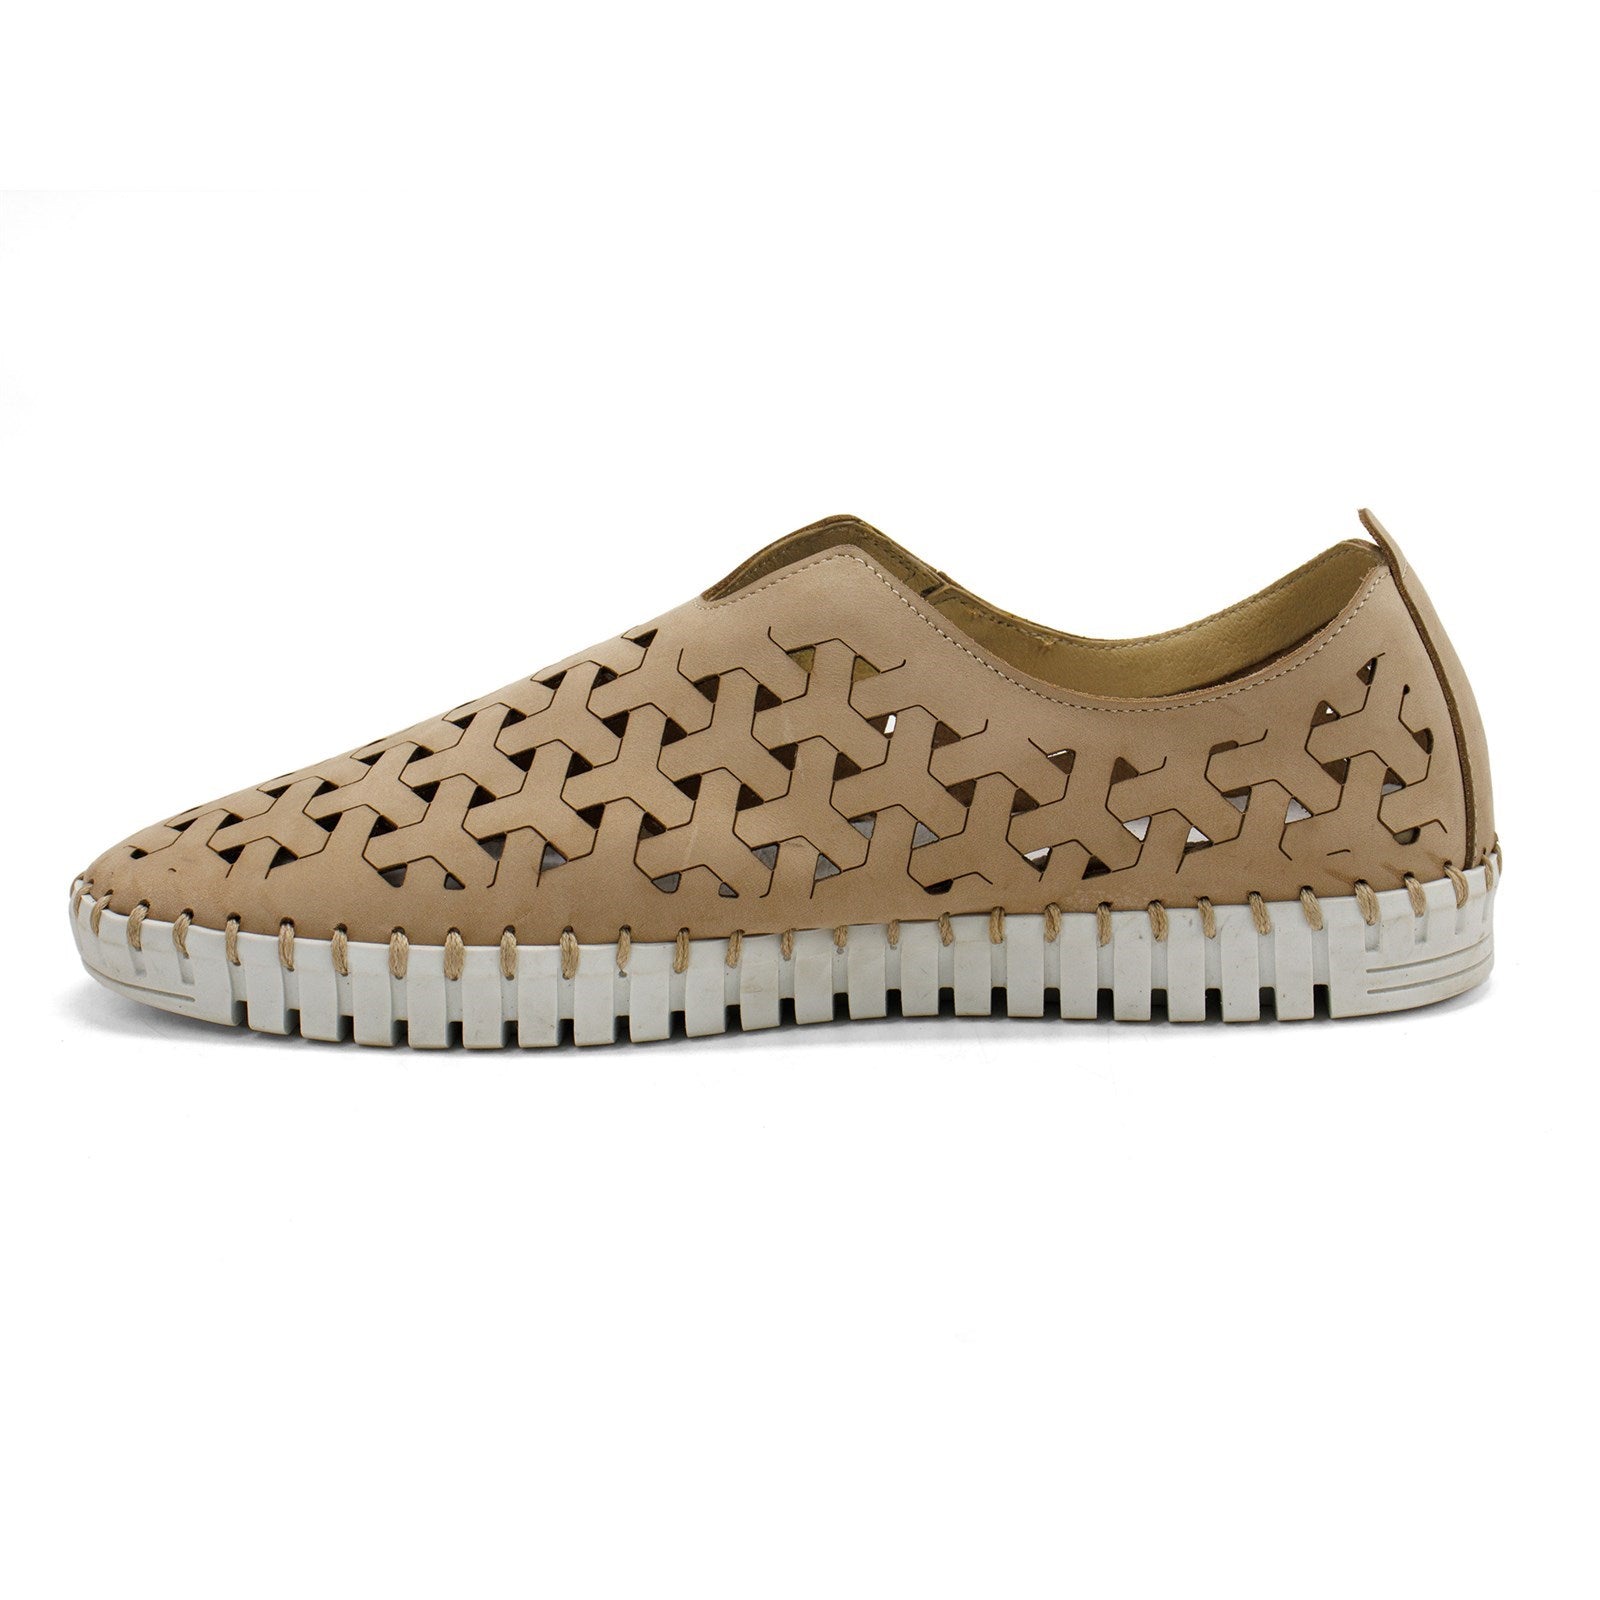 Eric Michael Women Inez Leather Slip-On Flat Comfort Shoes